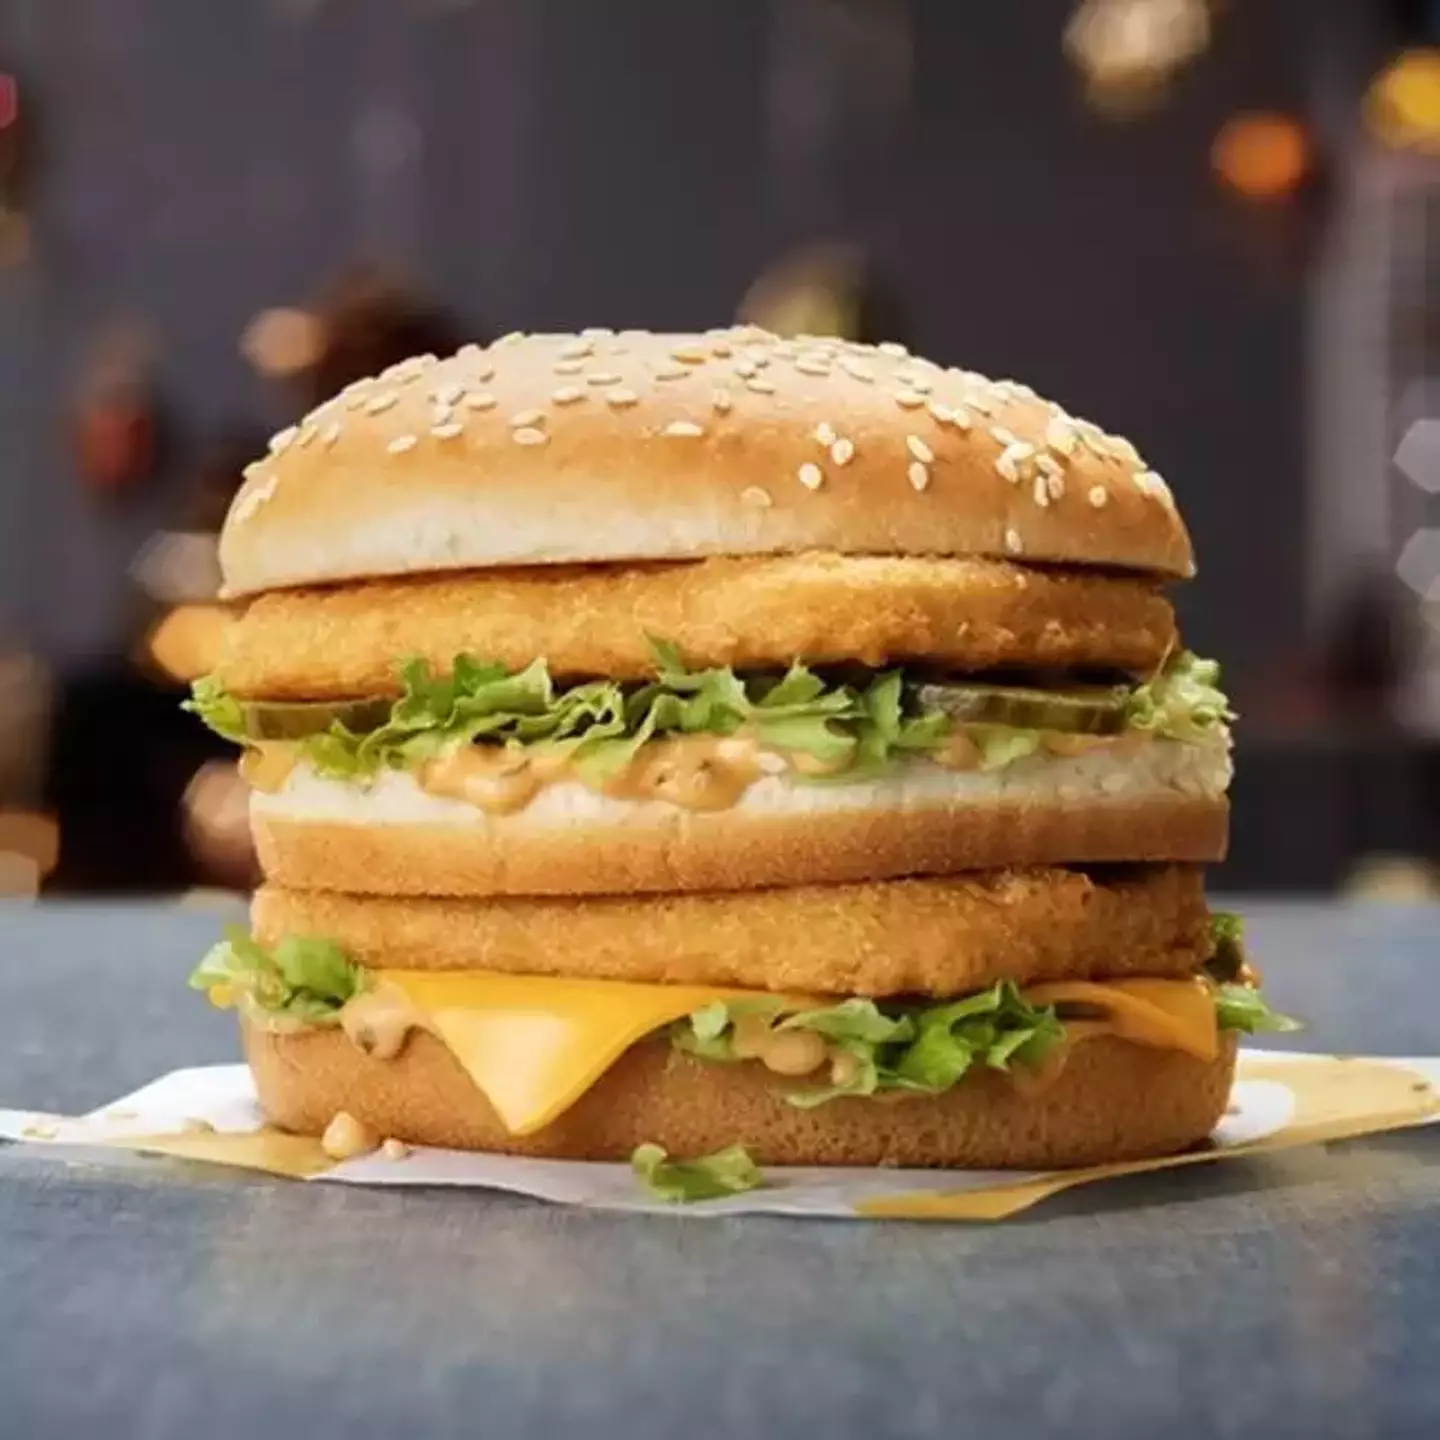 The Chicken Big Mac will be back.